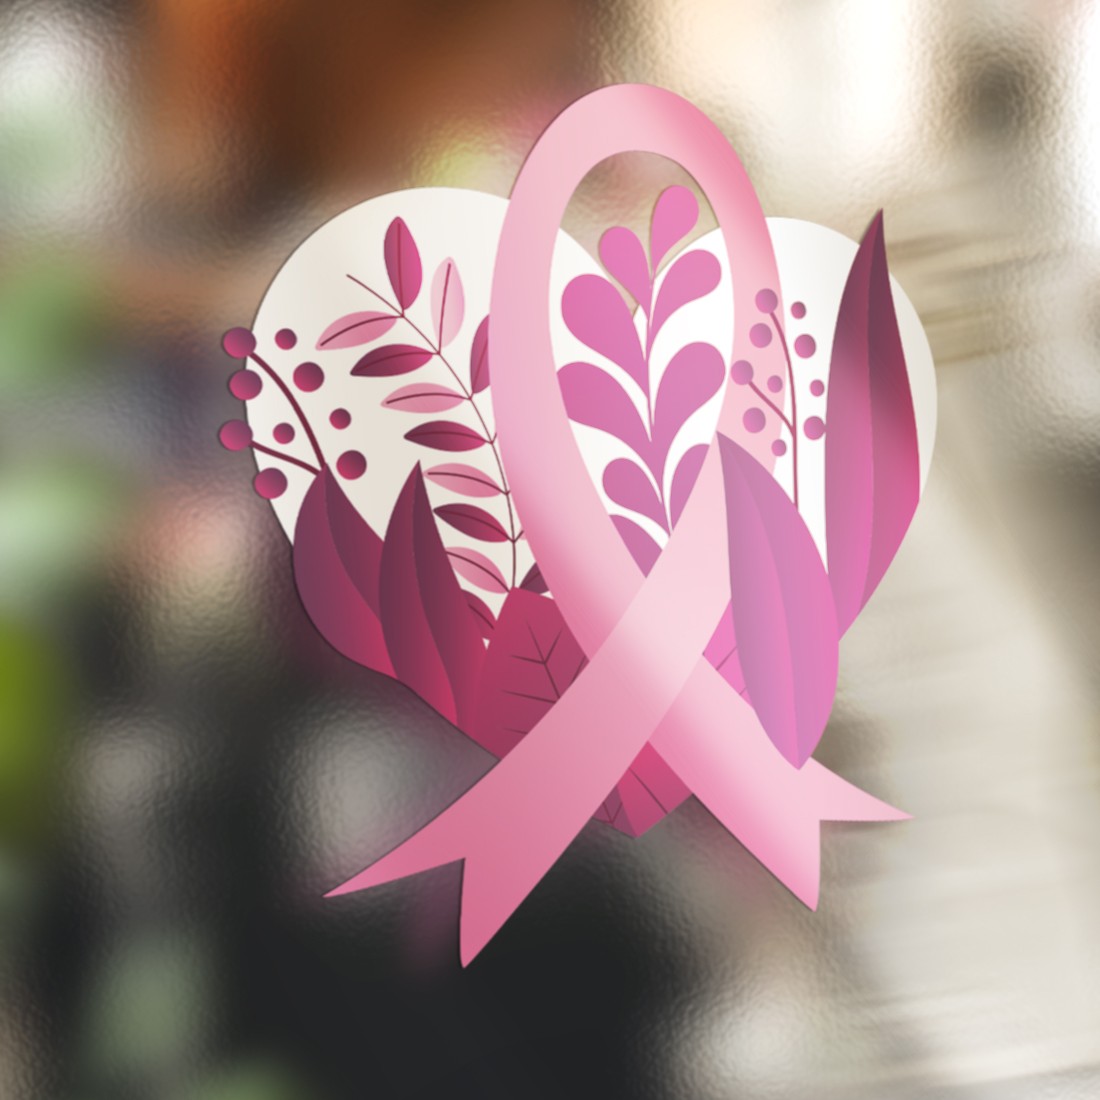 Sticker coeur fleuri octobre rose pour vitrine commerce, pharmacie